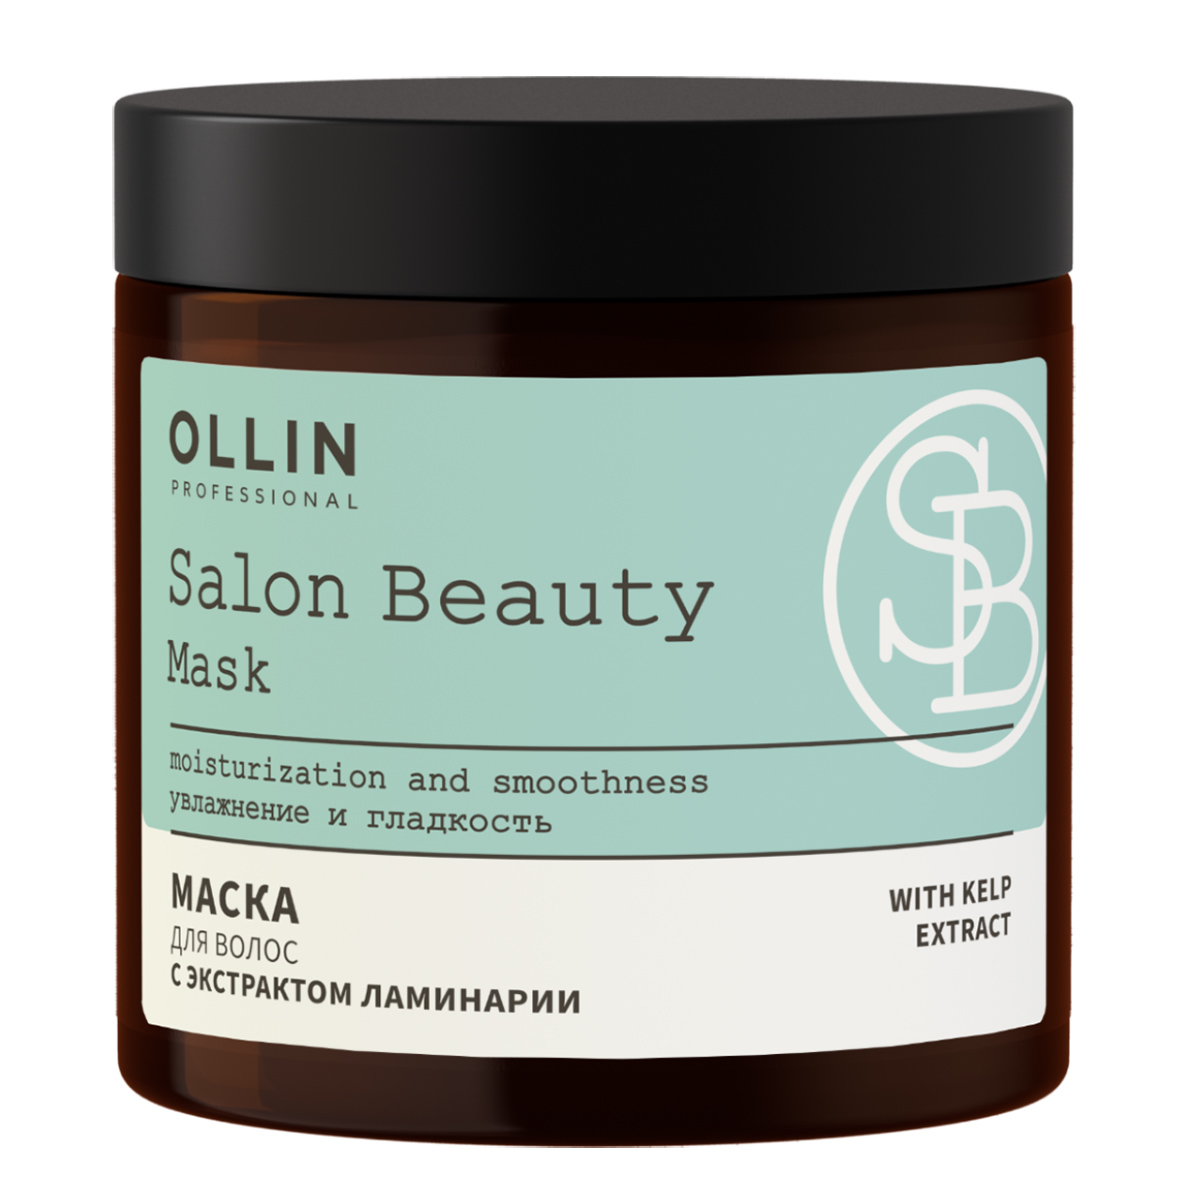 SALON BEAUTY Маска для волос с экстрактом ламинарии, 500мл, OLLIN - фото 1